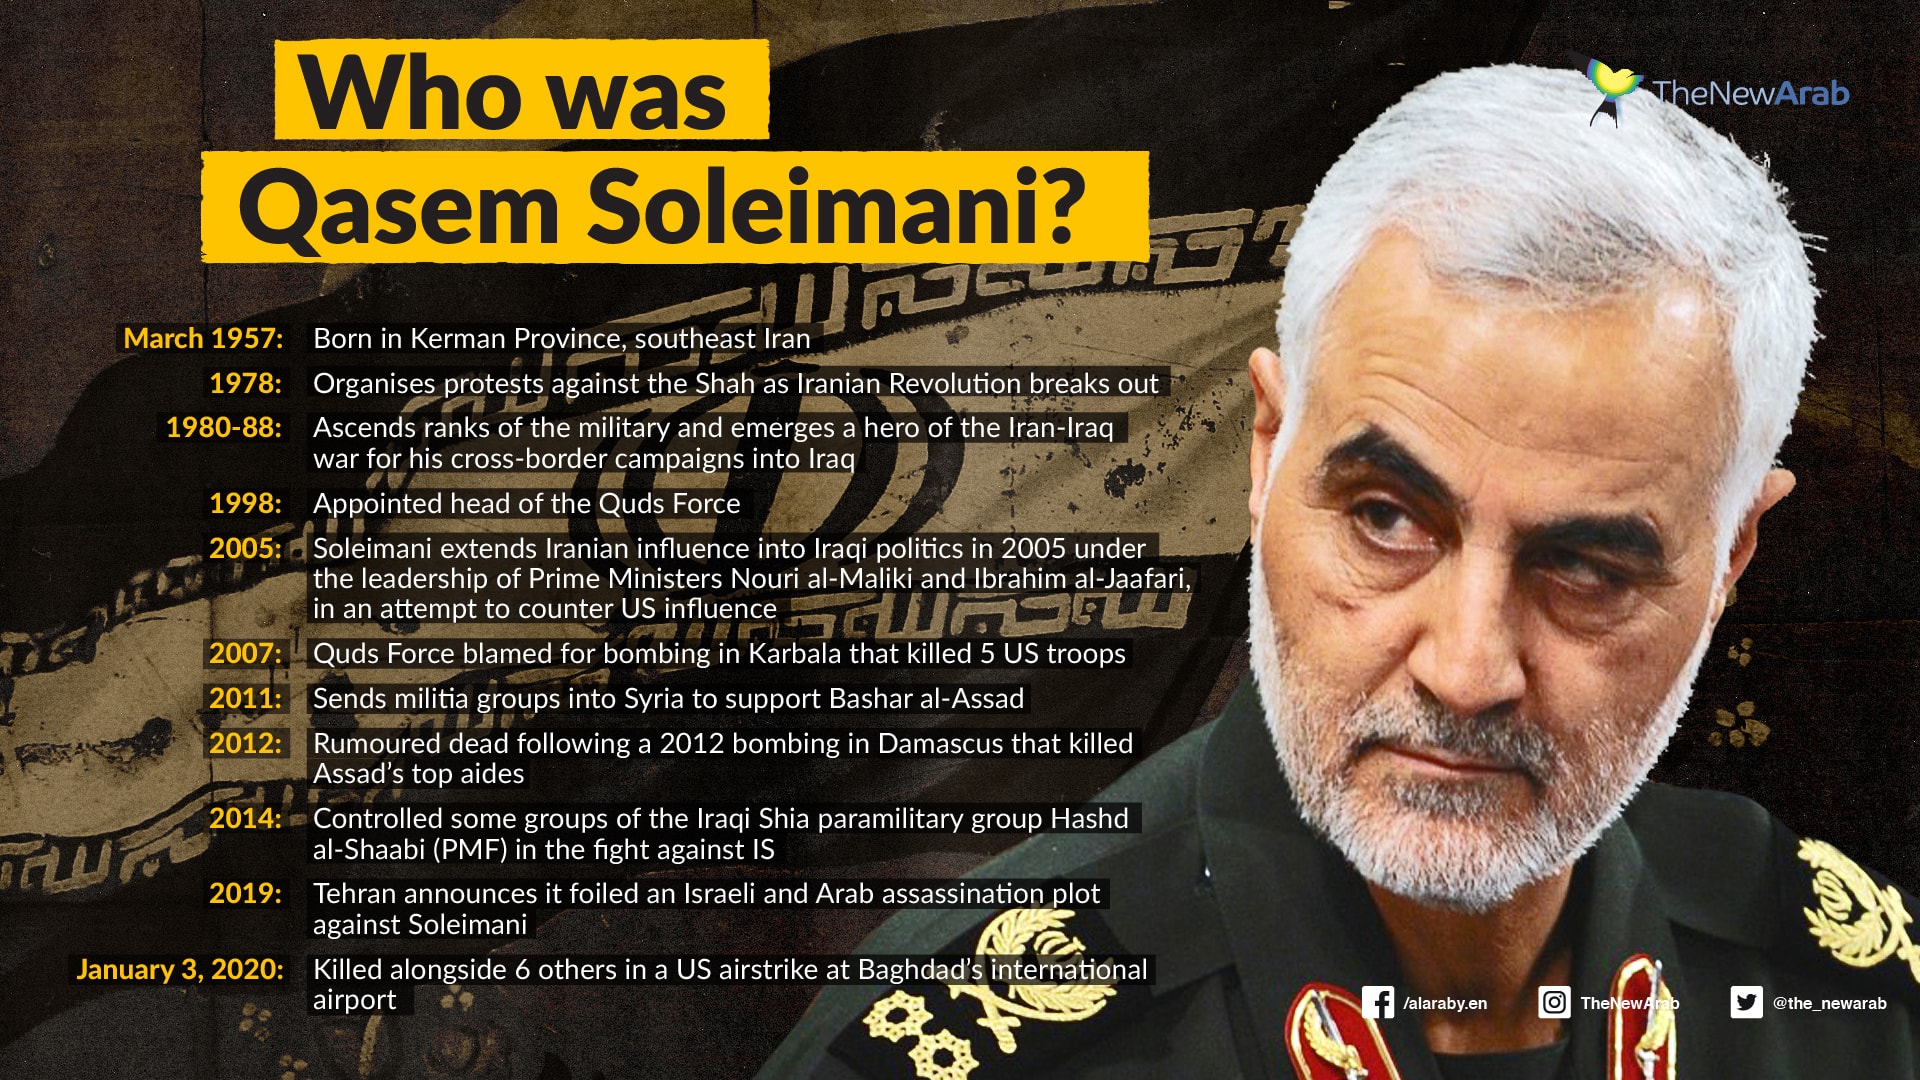 Who was Qasem Soleimani?